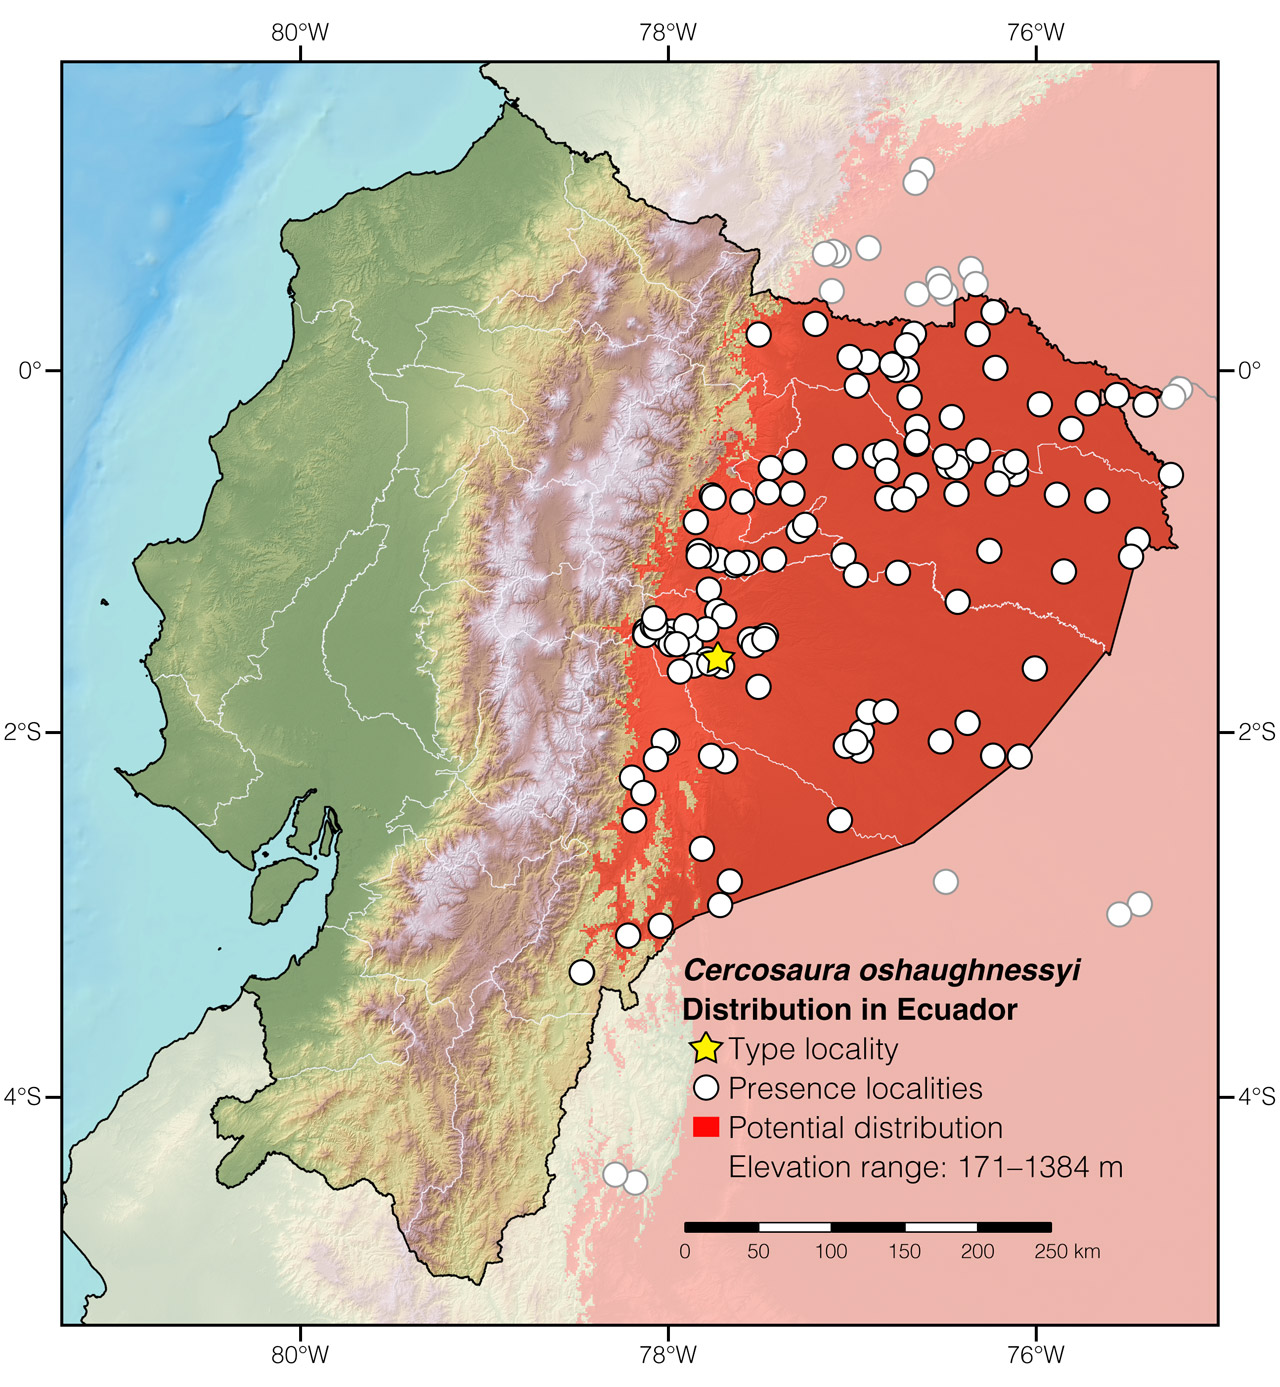 Distribution of Cercosaura oshaughnessyi in Ecuador